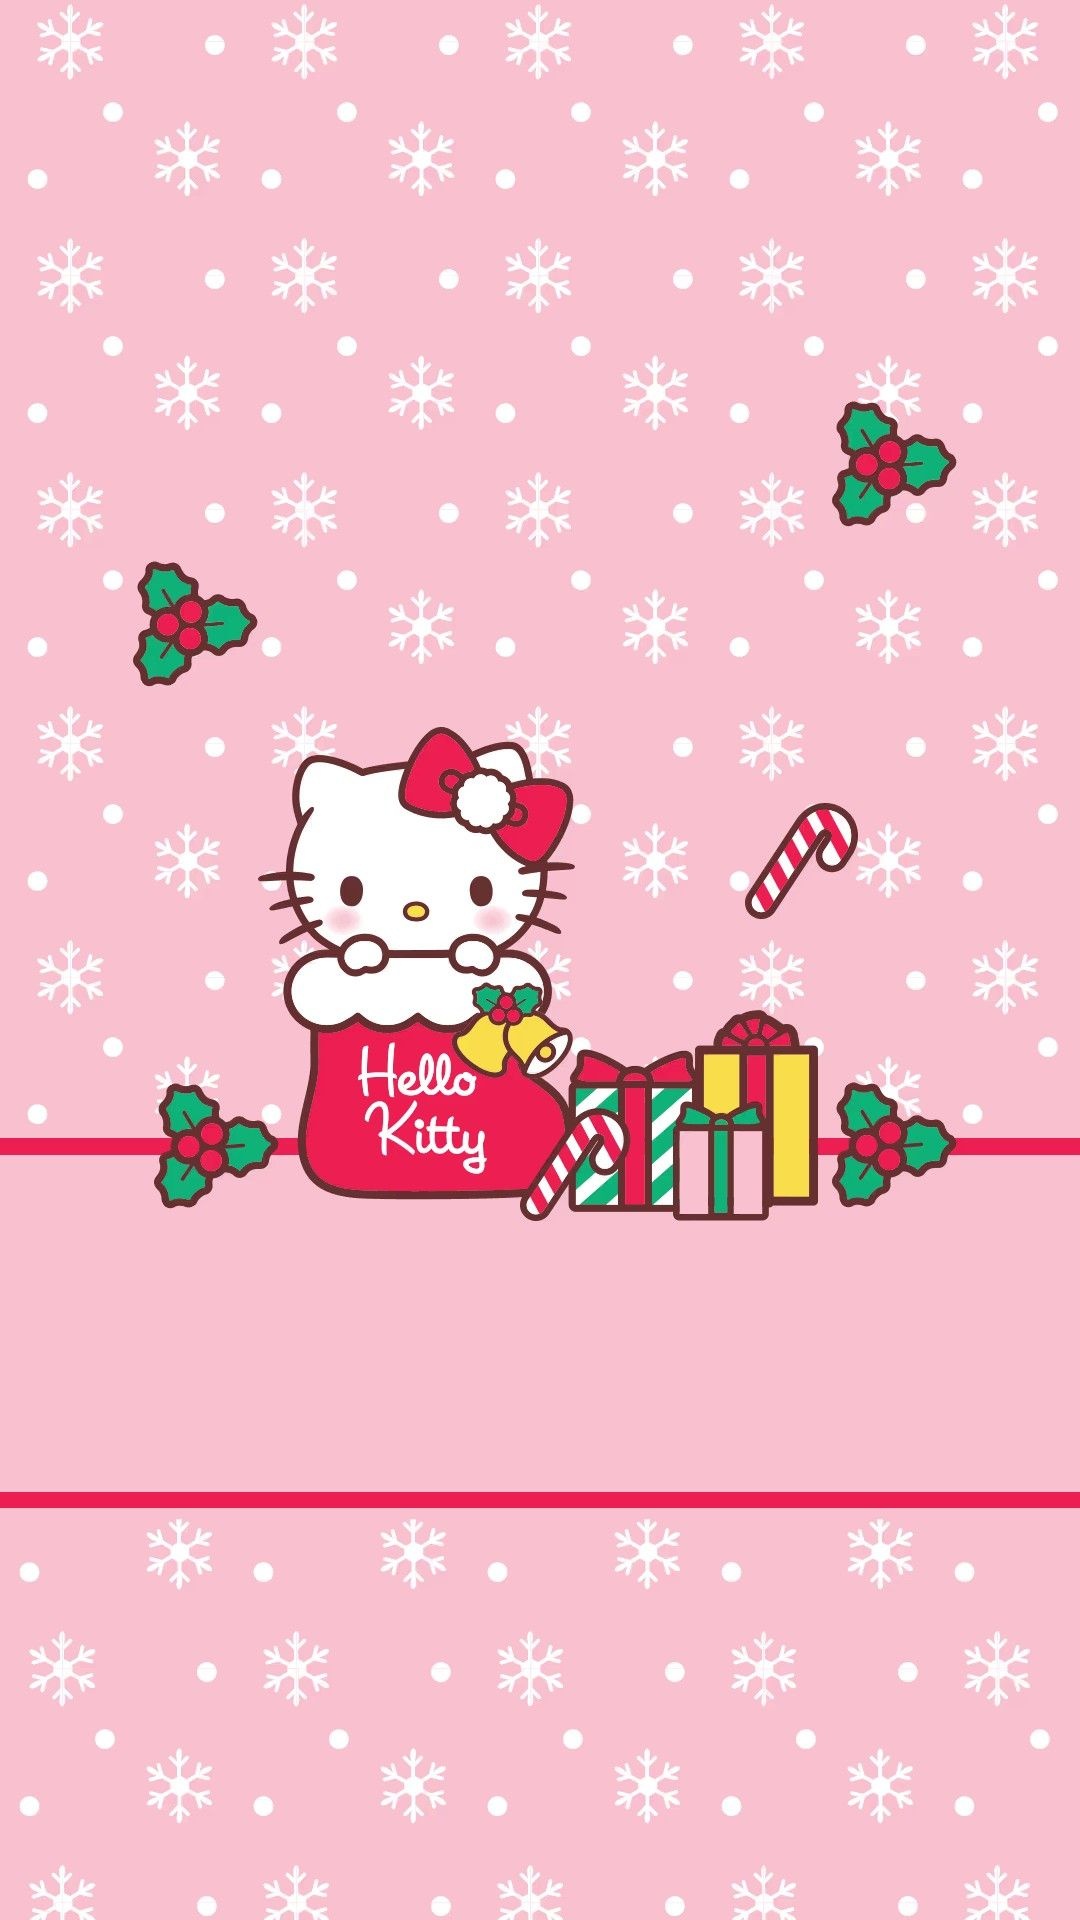 Hello Kitty Christmas, Festive wallpapers, Adorable kitty, Holiday cheer, 1080x1920 Full HD Phone